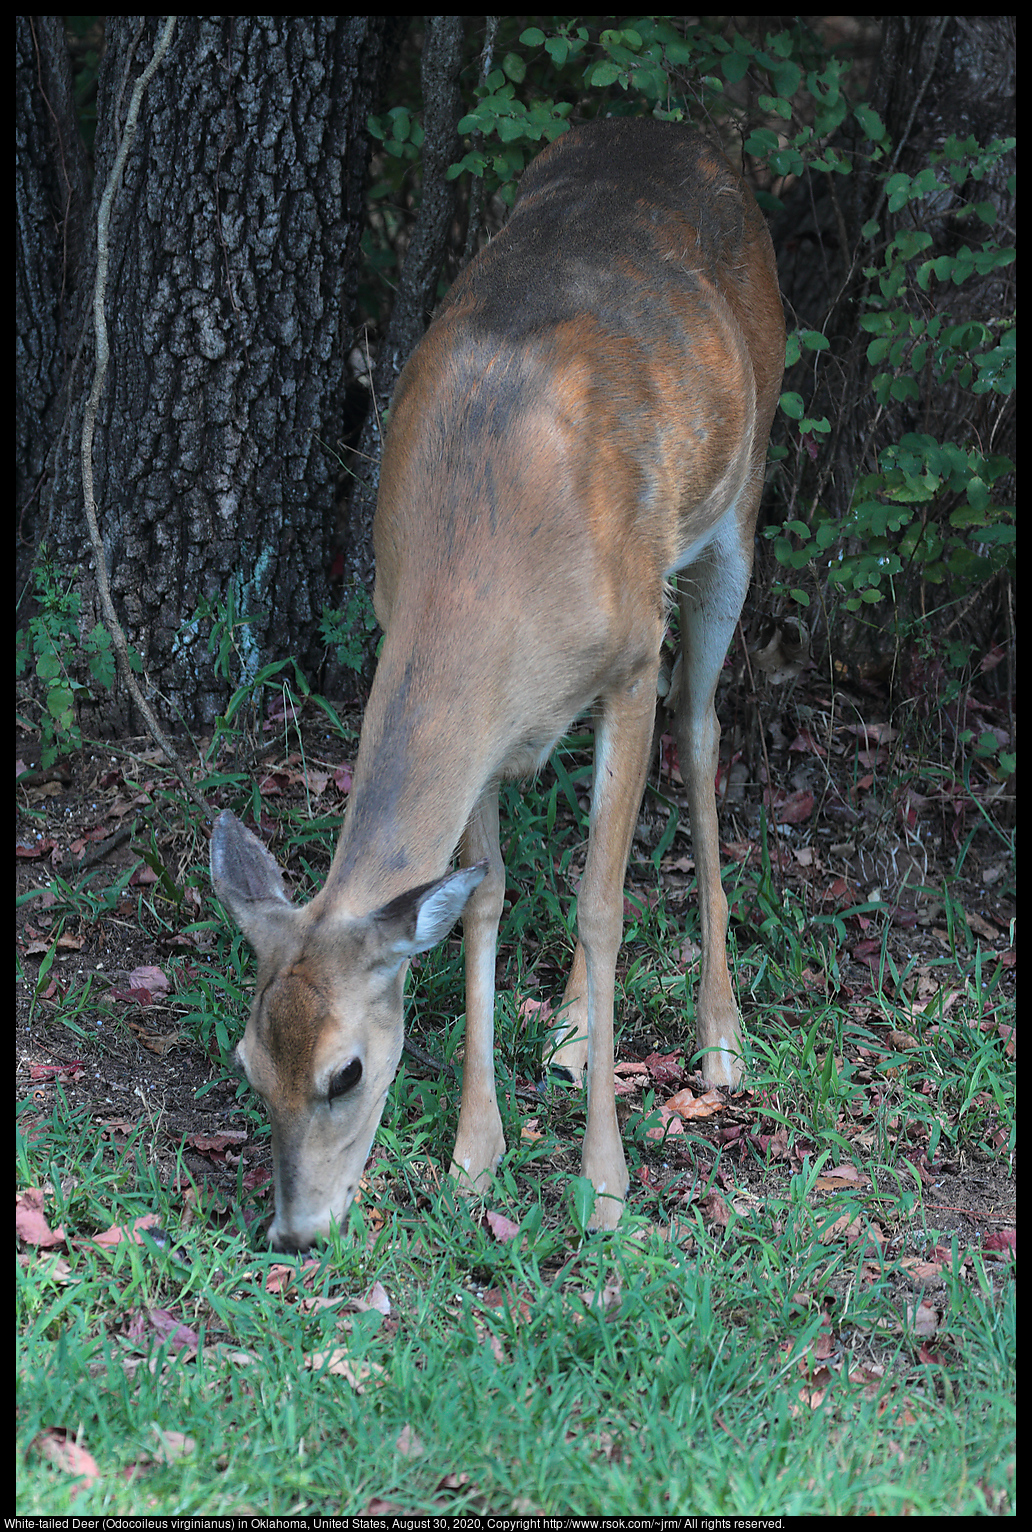 White-tailed Deer (Odocoileus virginianus) in Oklahoma, United States, August 30, 2020